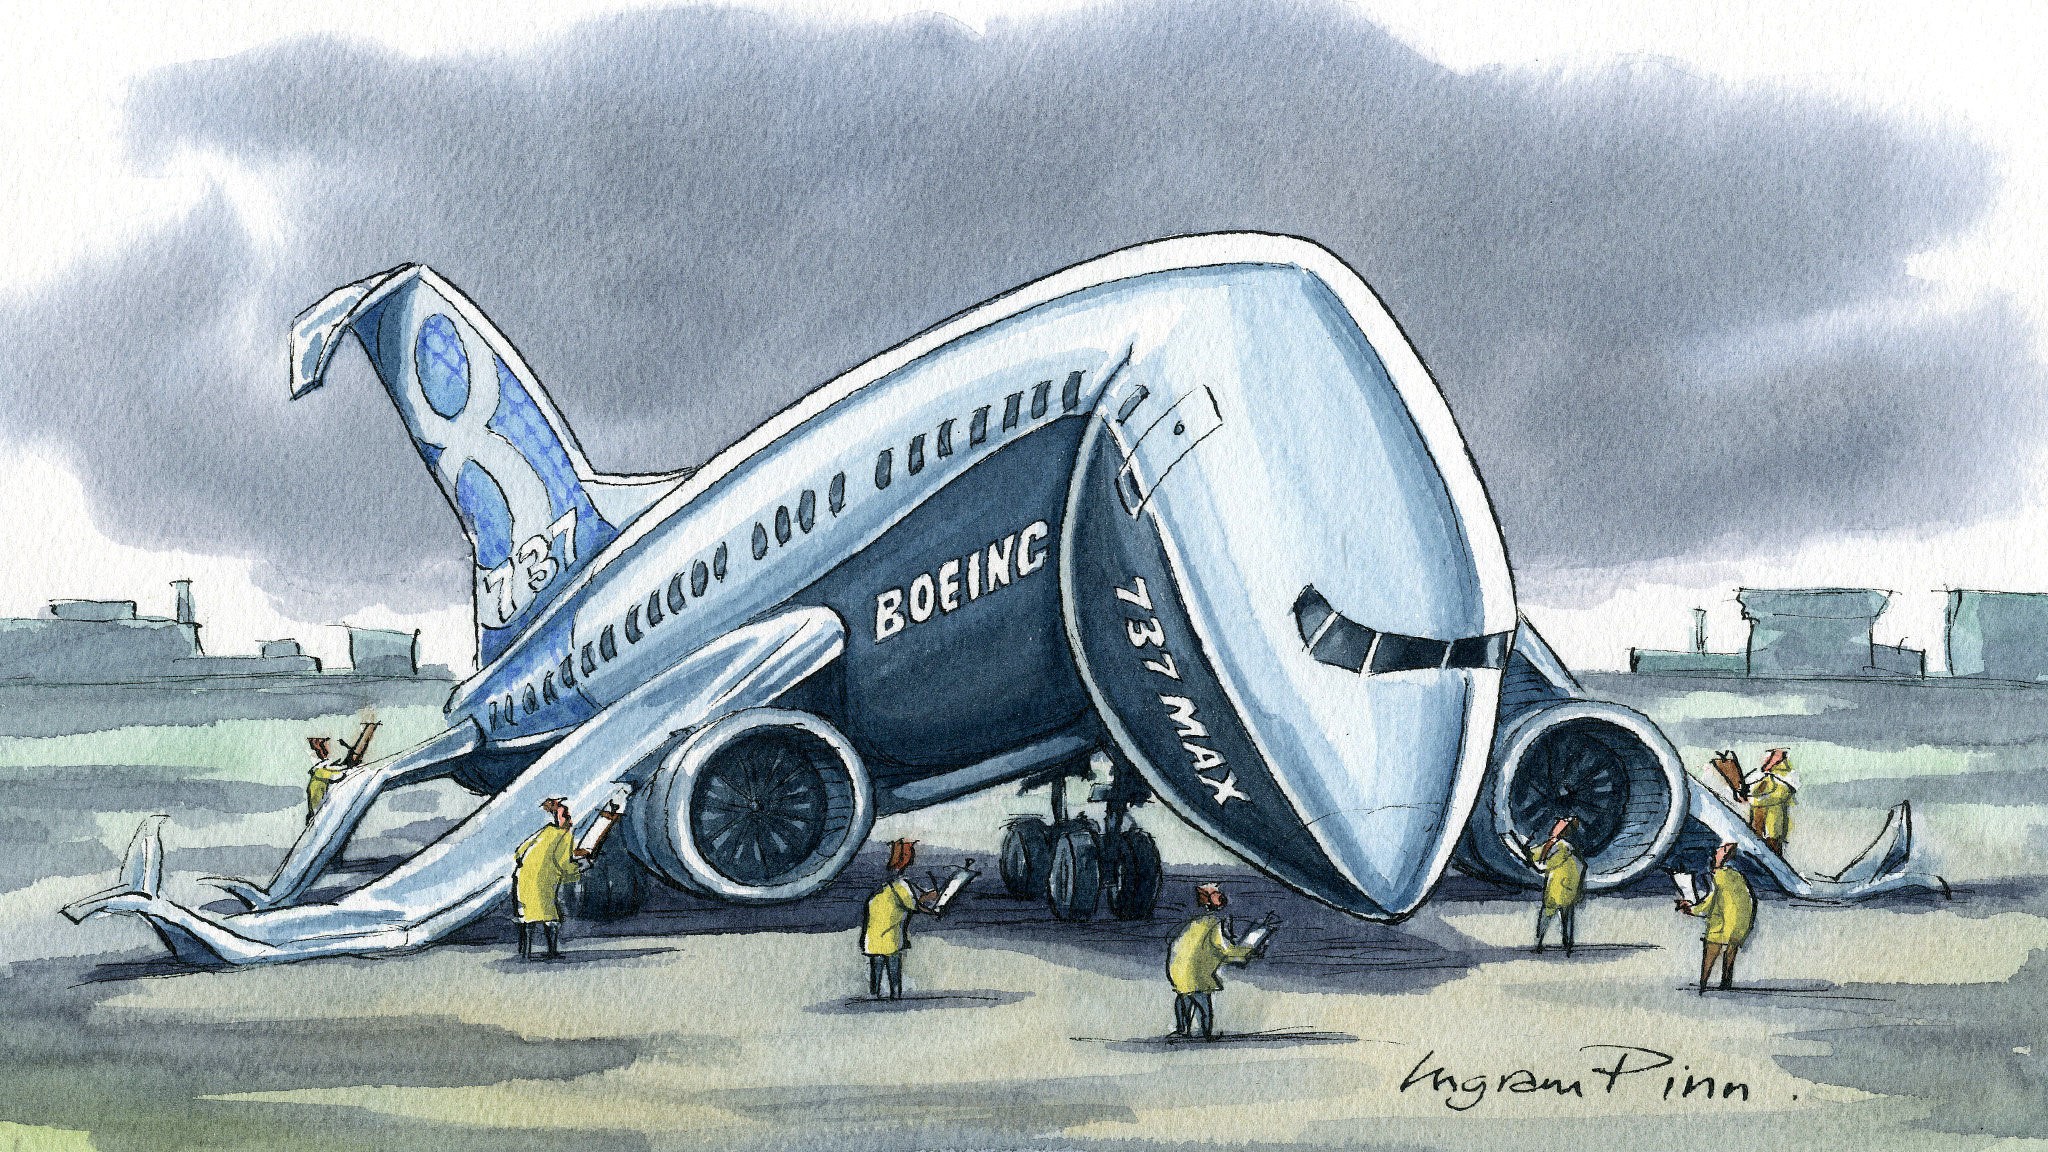 H καθήλωση των 737 Max επηρεάζει και τον Ελληνικό τουρισμό